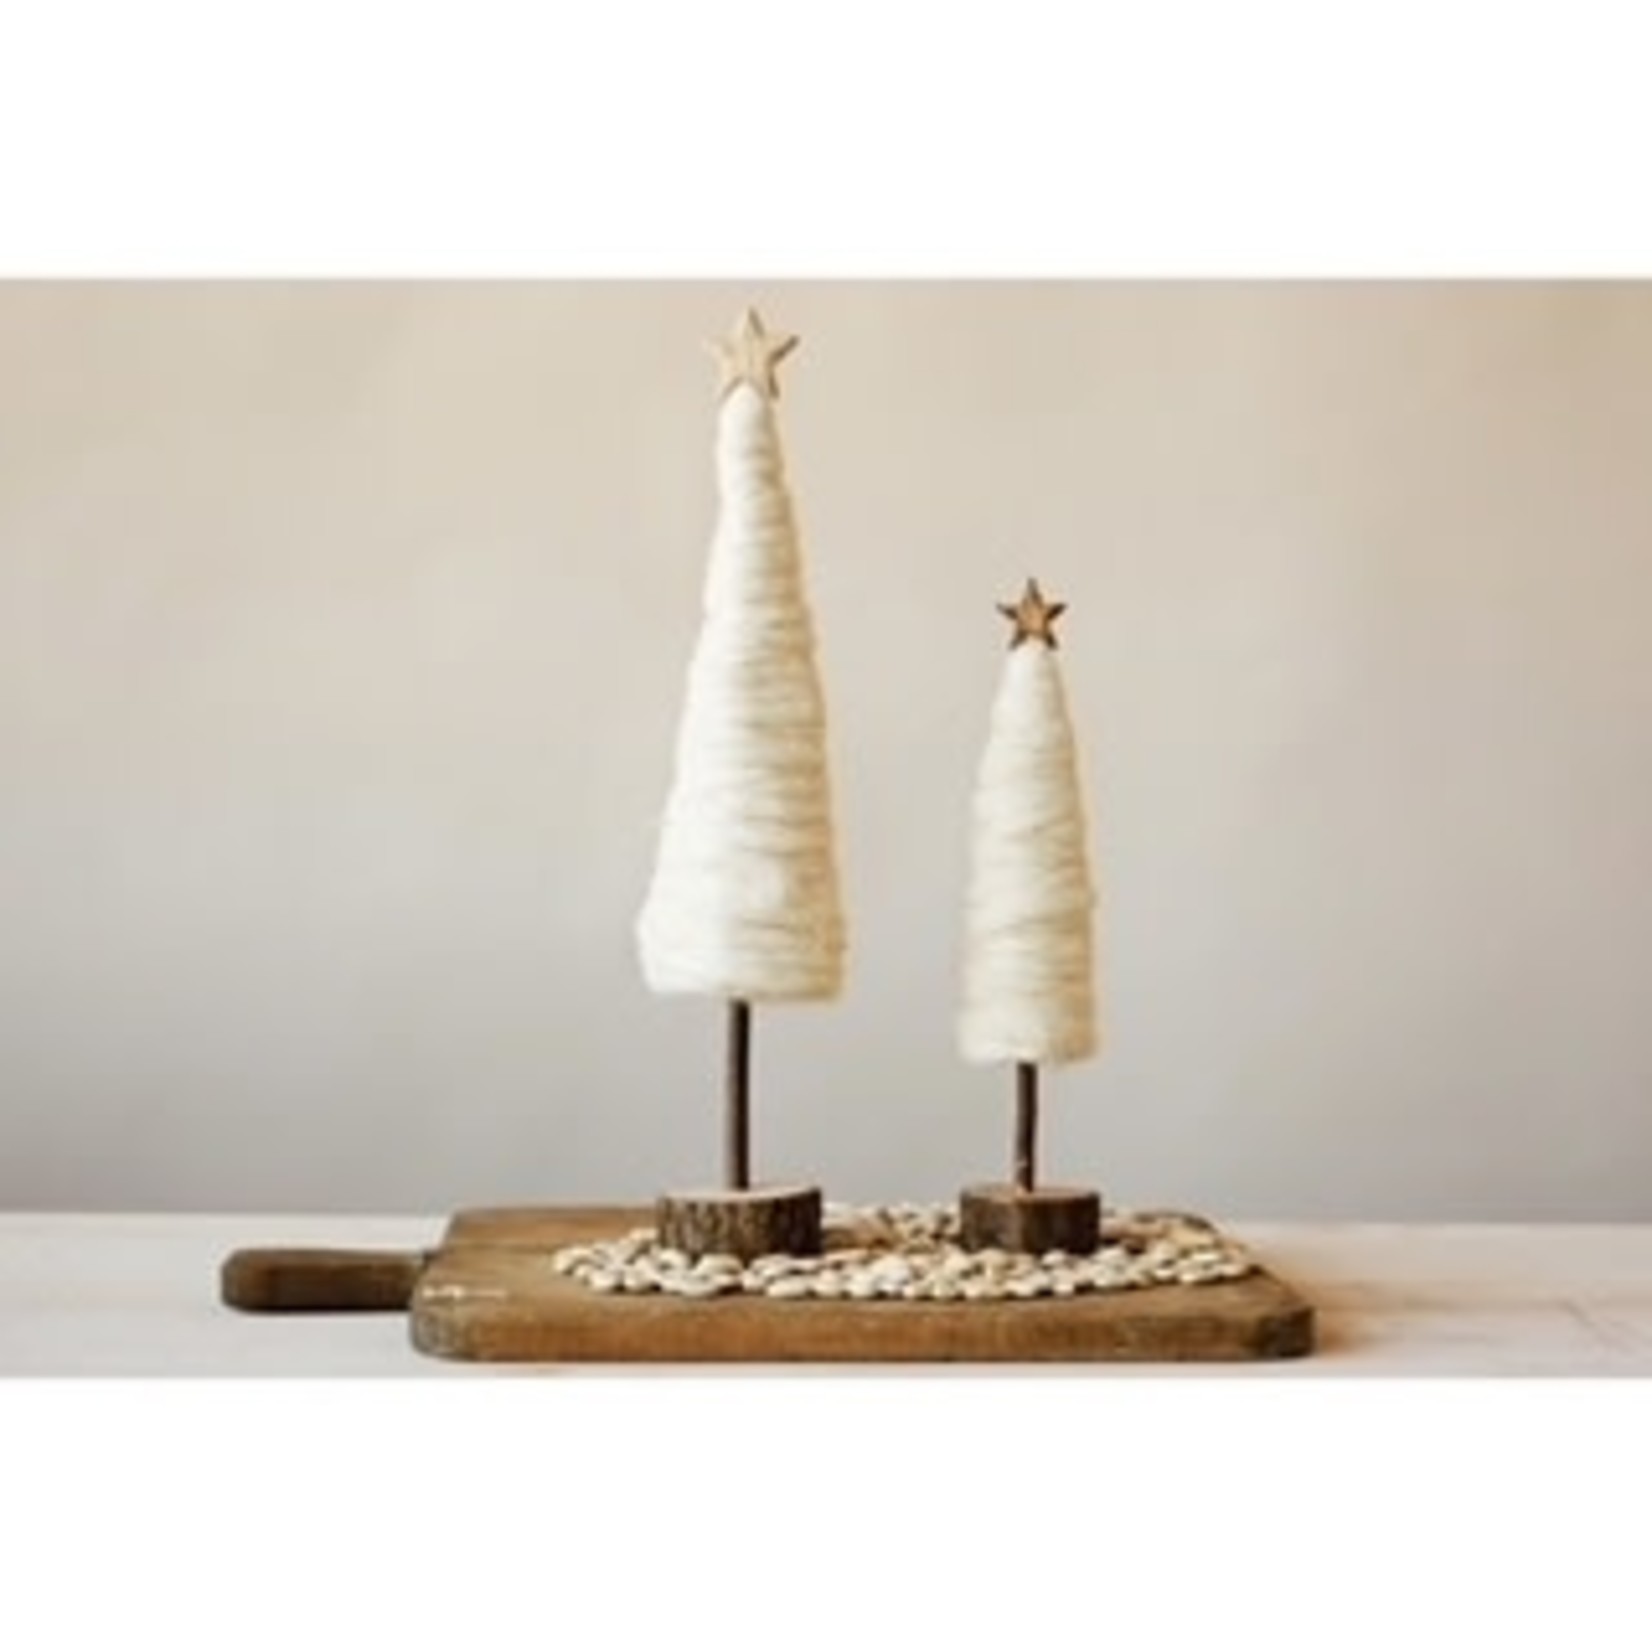 18" Wool Christmas Tree CR